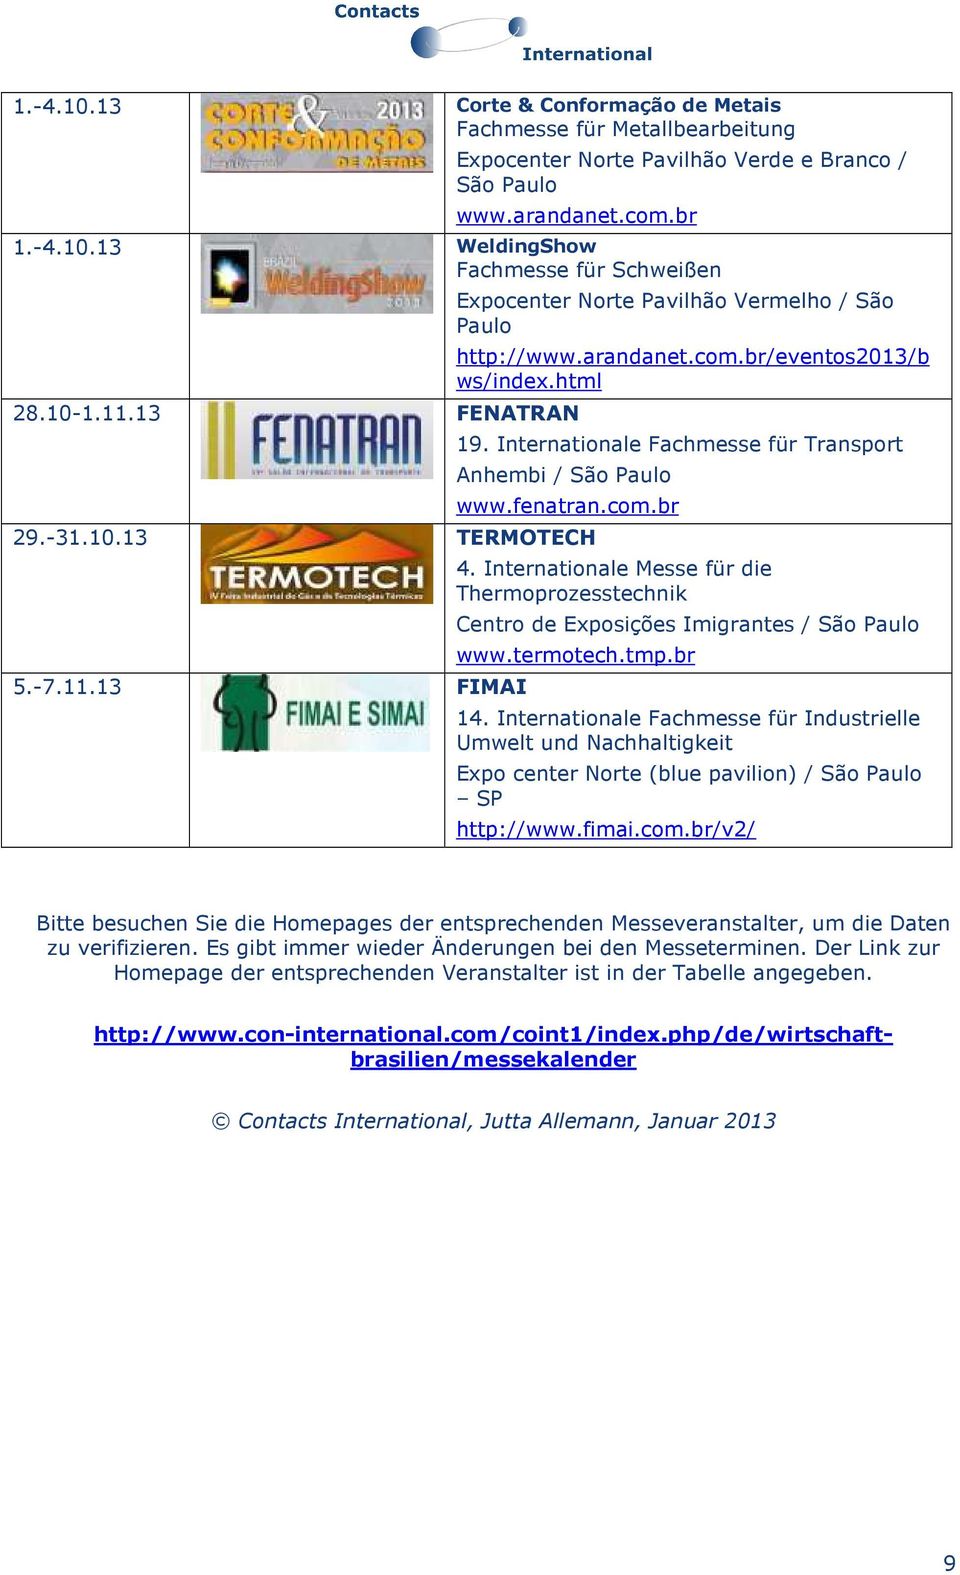 -7.11.13 FIMAI 4. Internationale Messe für die Thermoprozesstechnik www.termotech.tmp.br 14.